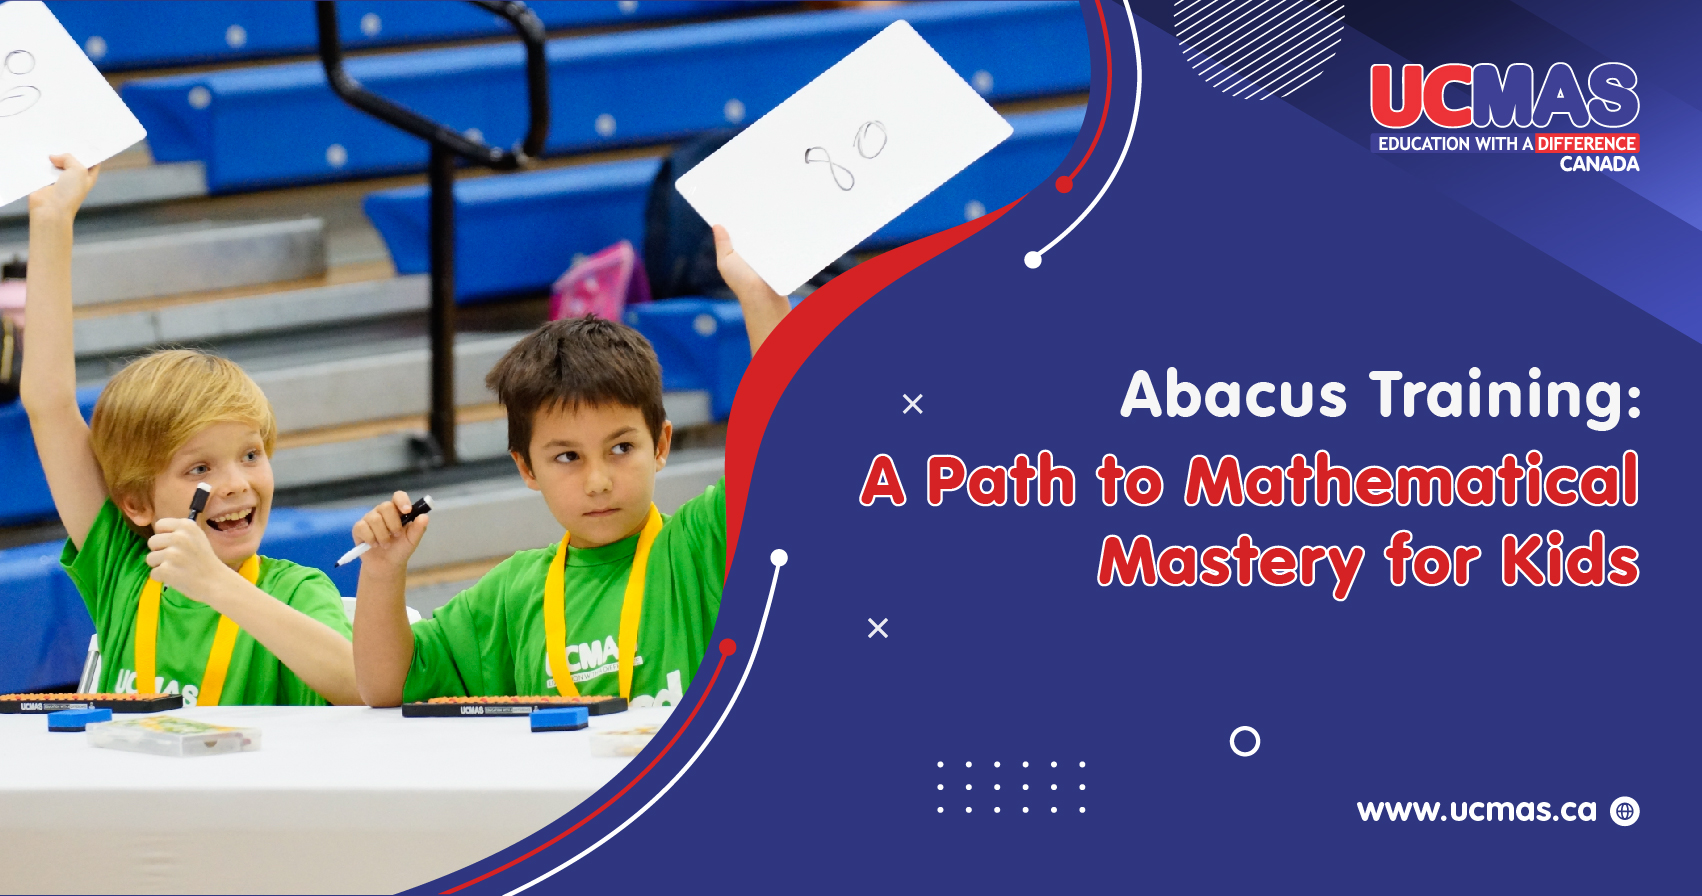 6 Benefits of Undergoing Abacus Math Training